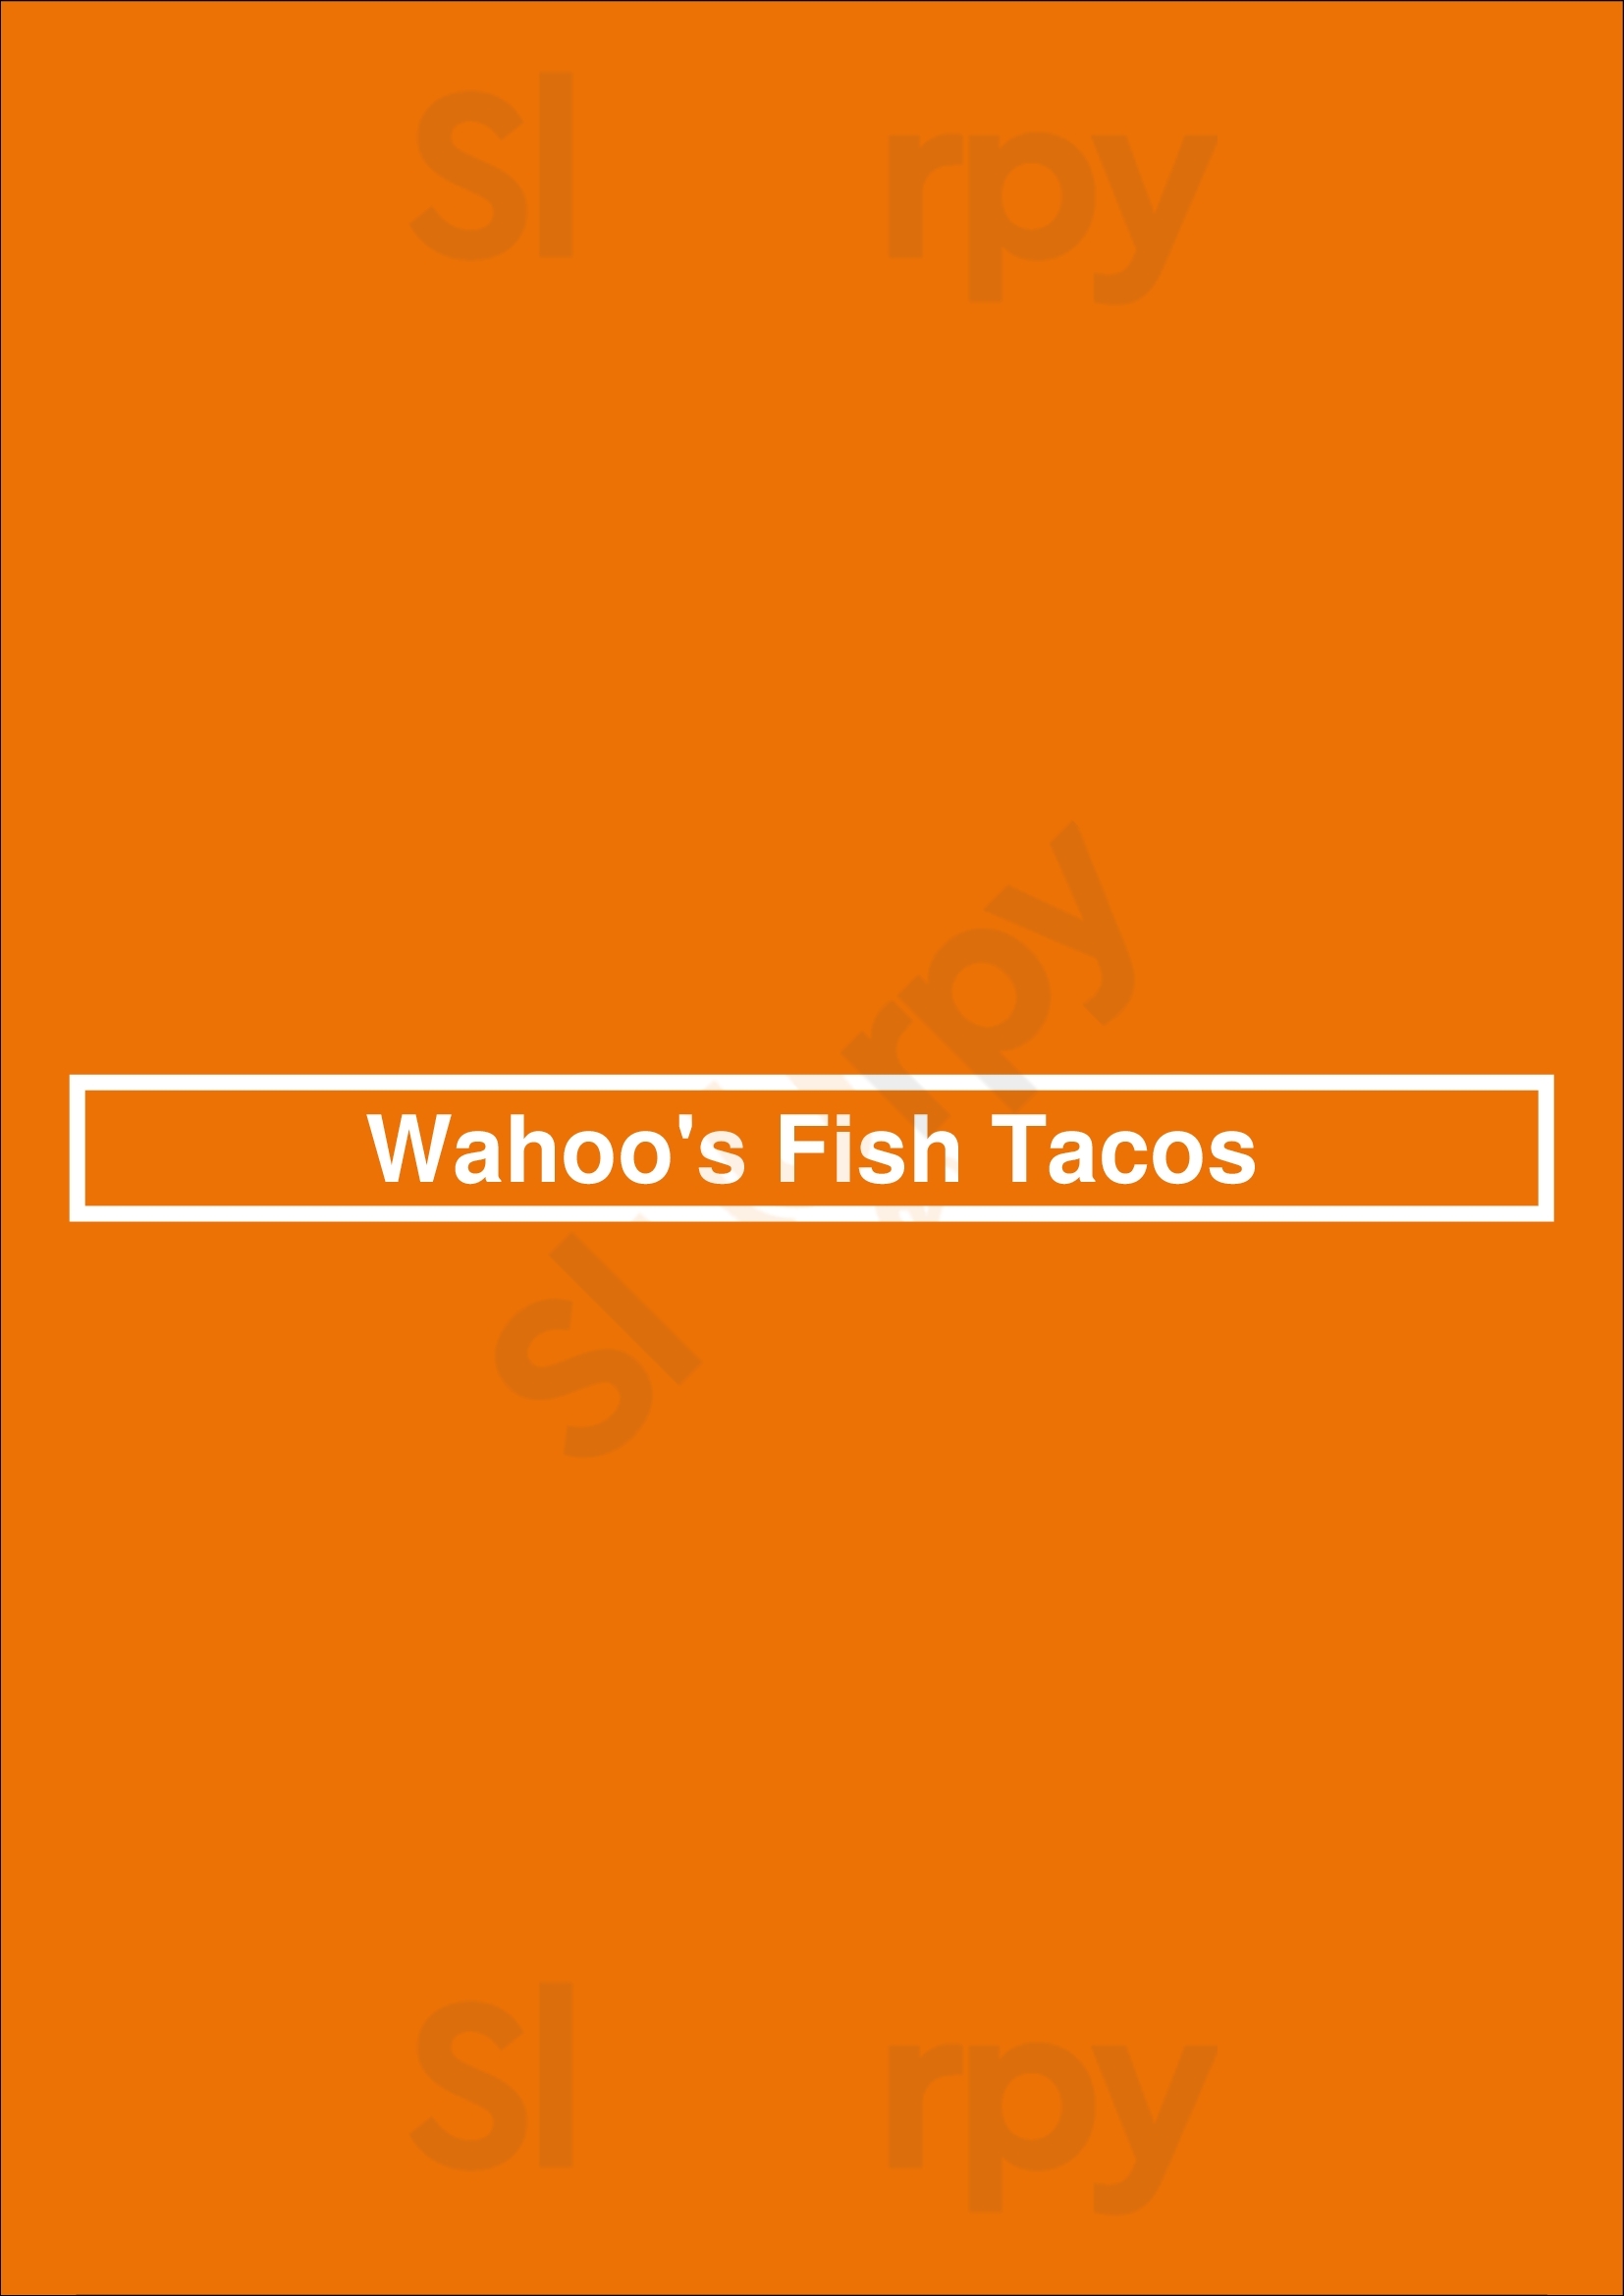 Wahoo's Fish Tacos Fresno Menu - 1